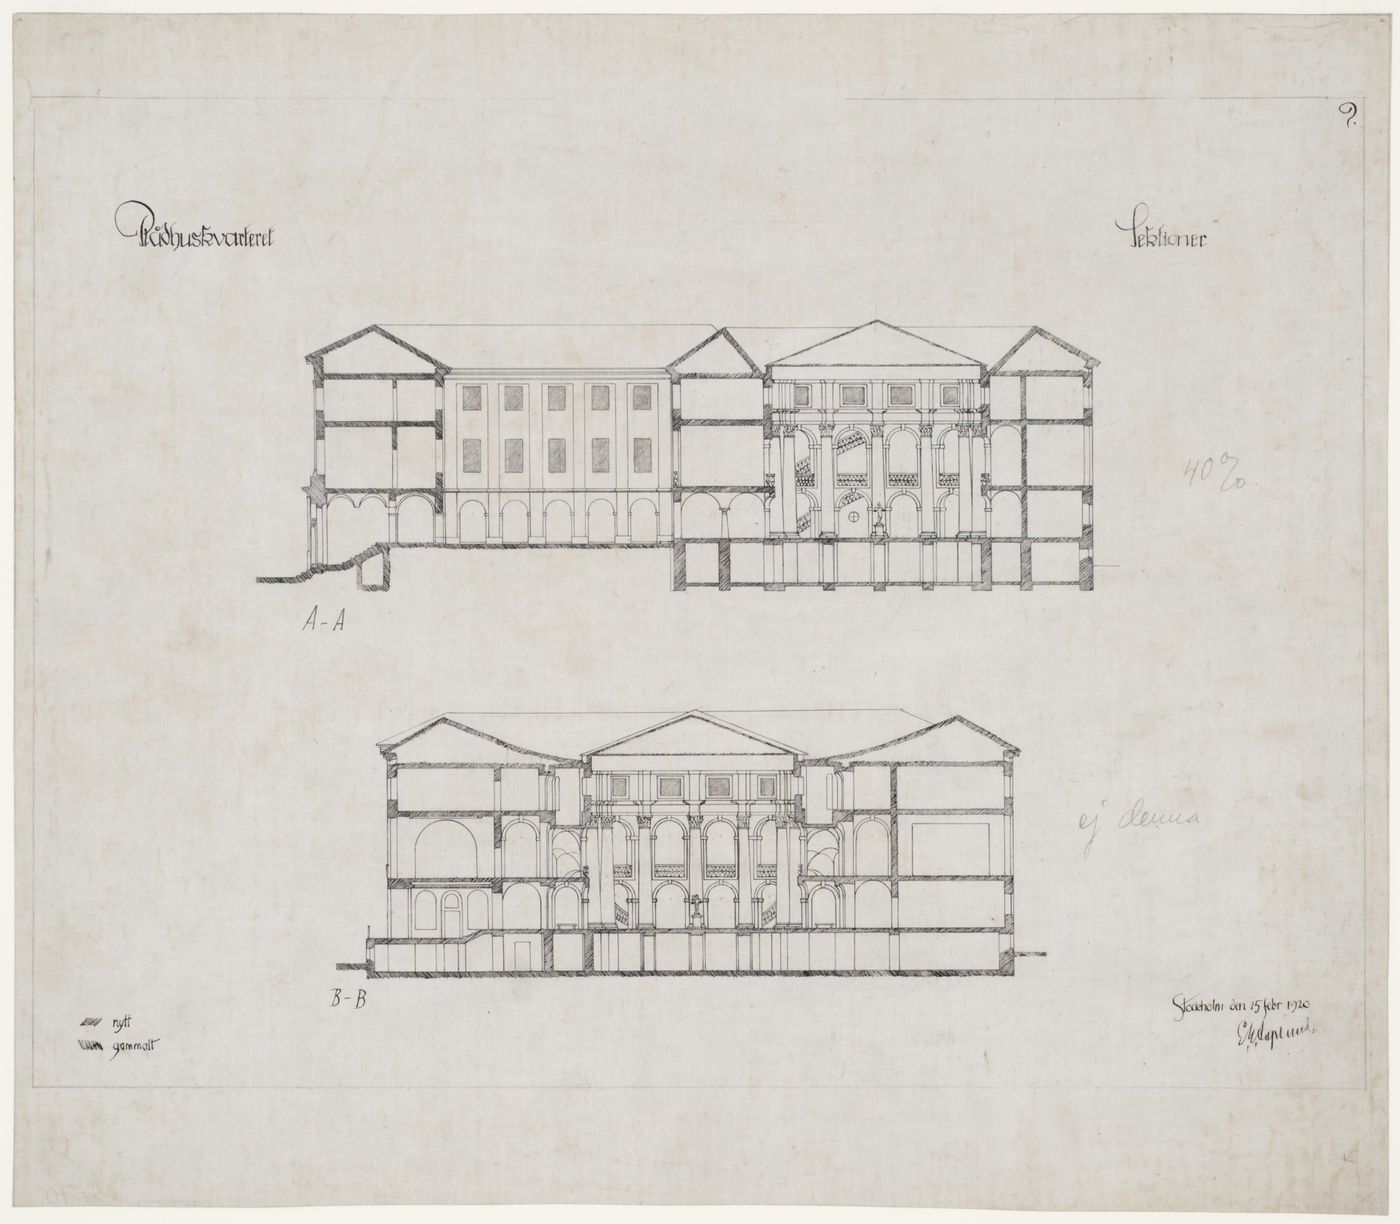 Sections A-A and B-B for the 1918-1925 design for the Göteborgs rådhusets tillbyggnad [courthouse annex], Göteborg, Sweden